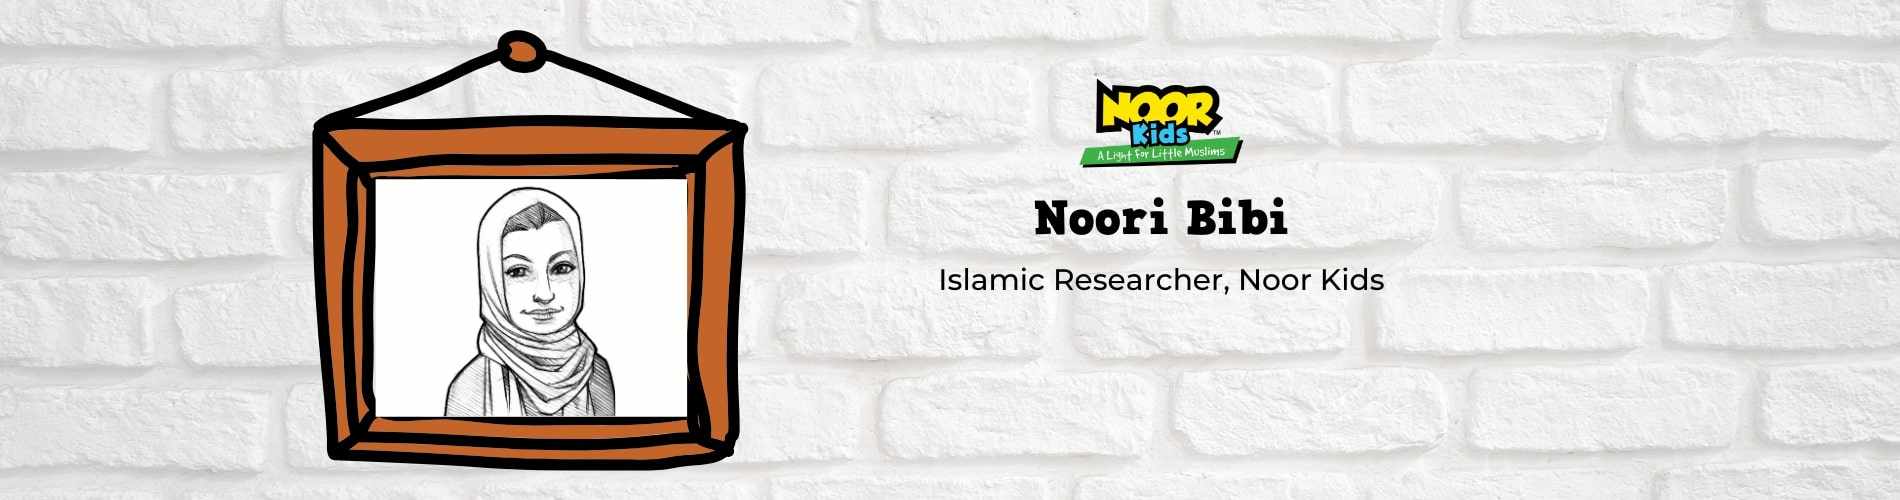 Meet Noori Bibi, Islamic Researcher at Noor Kids